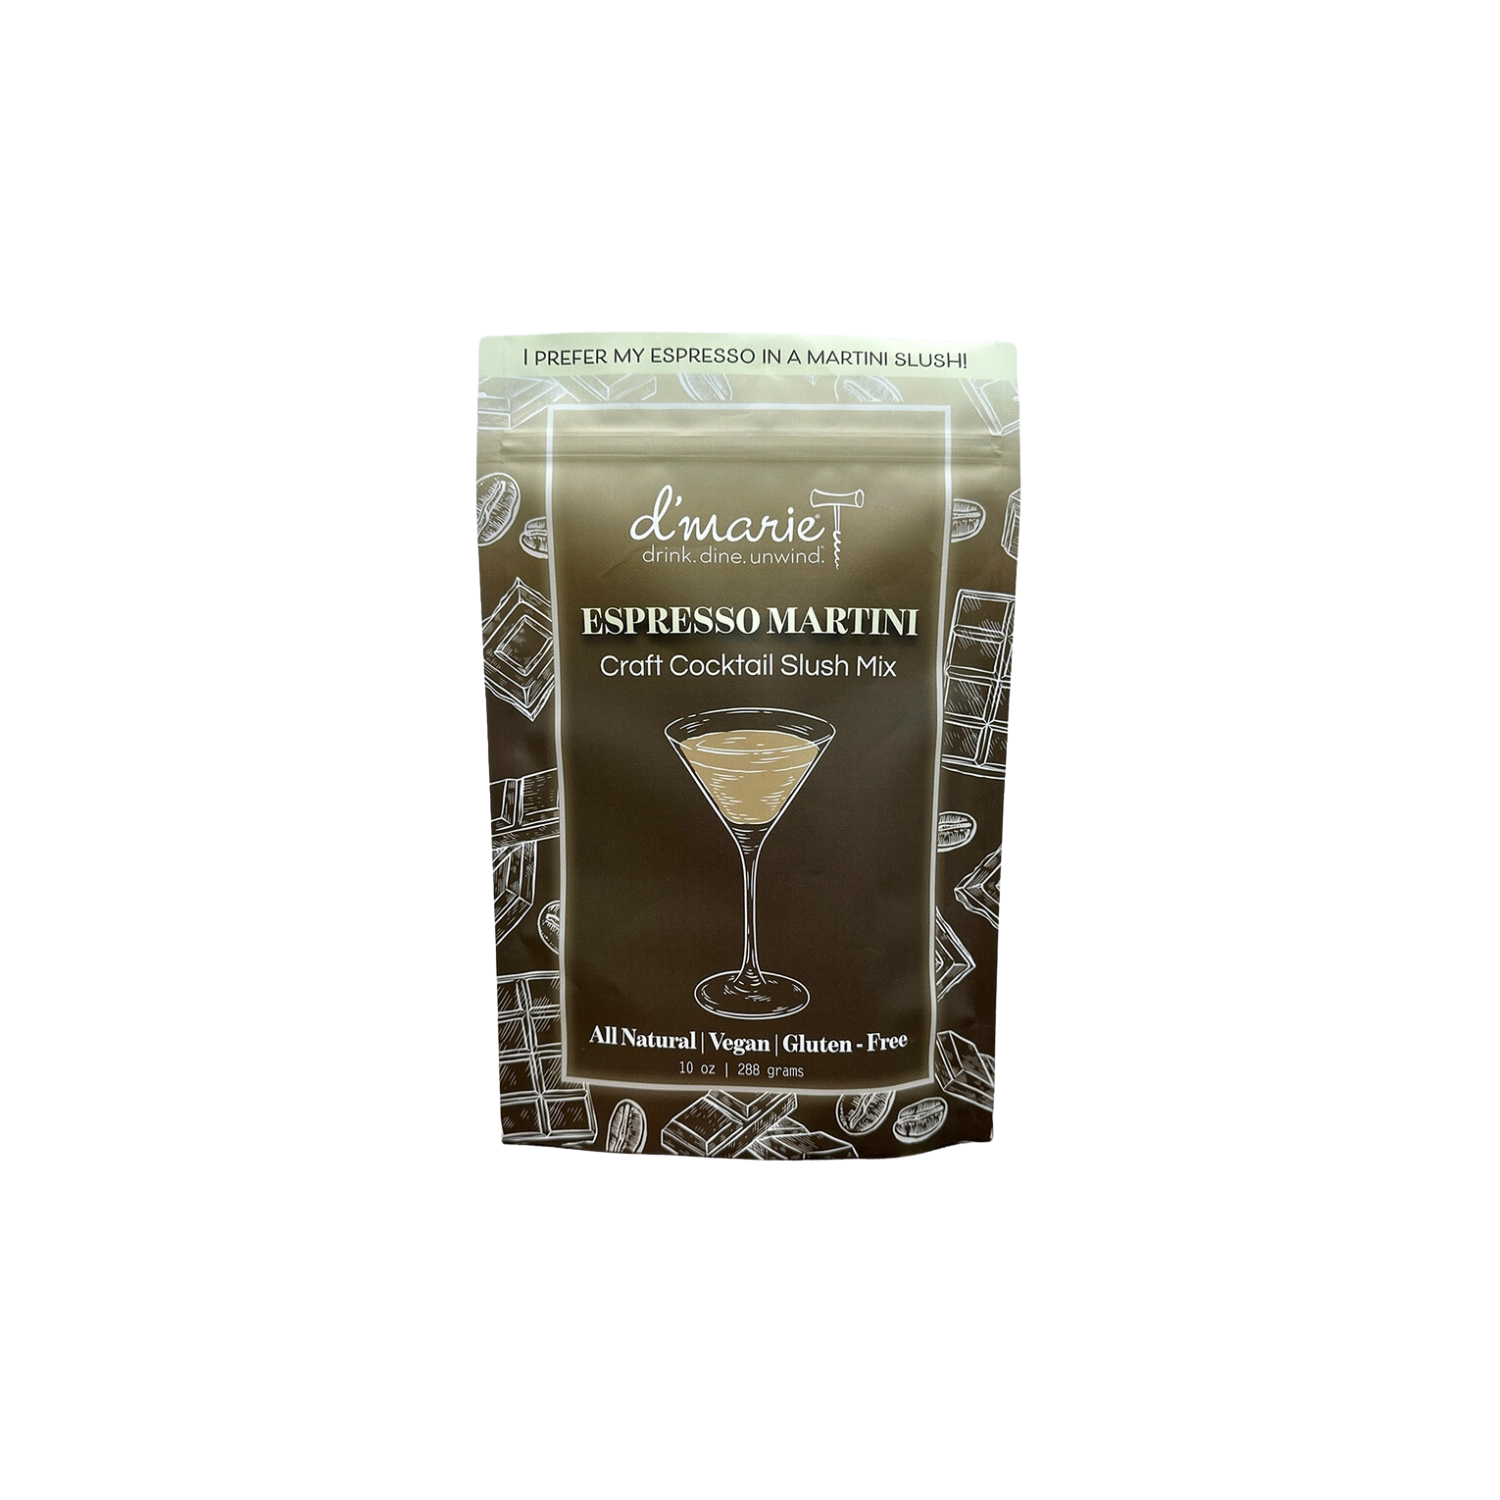 Espresso Martini Craft Cocktail Slush Mix